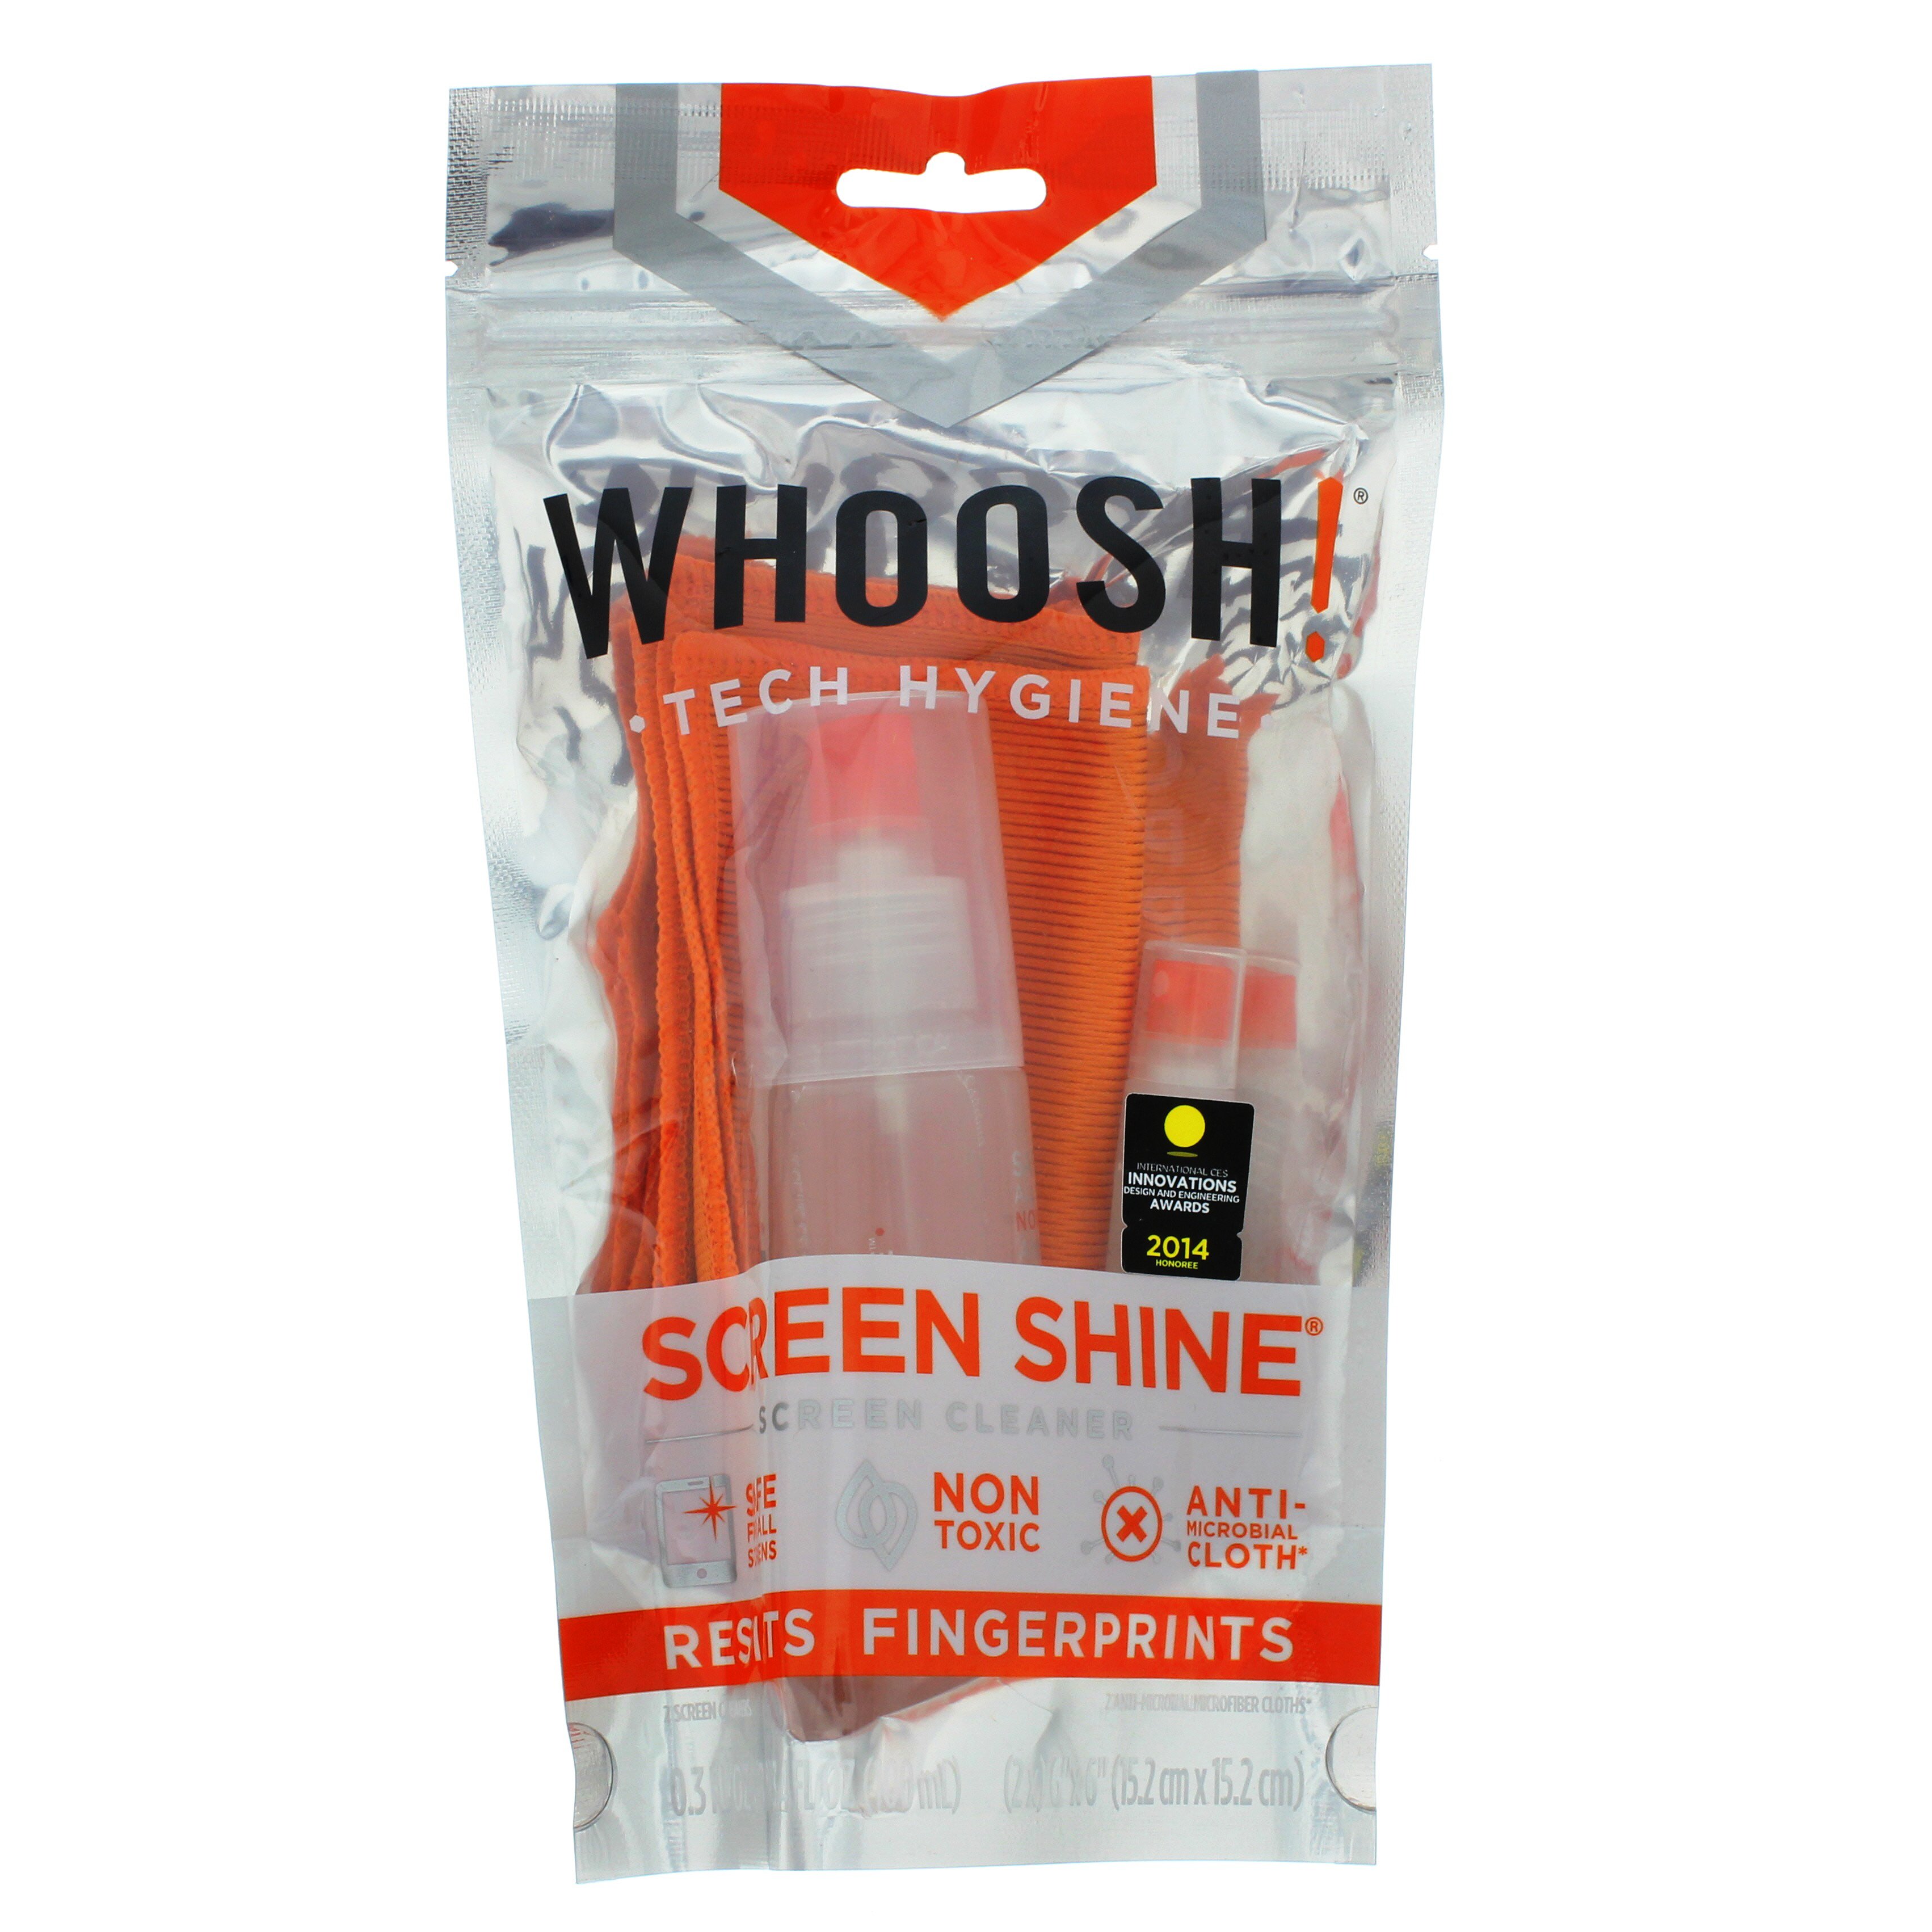 Whoosh! Screen Shine Pocket Kit - Shop at H-E-B